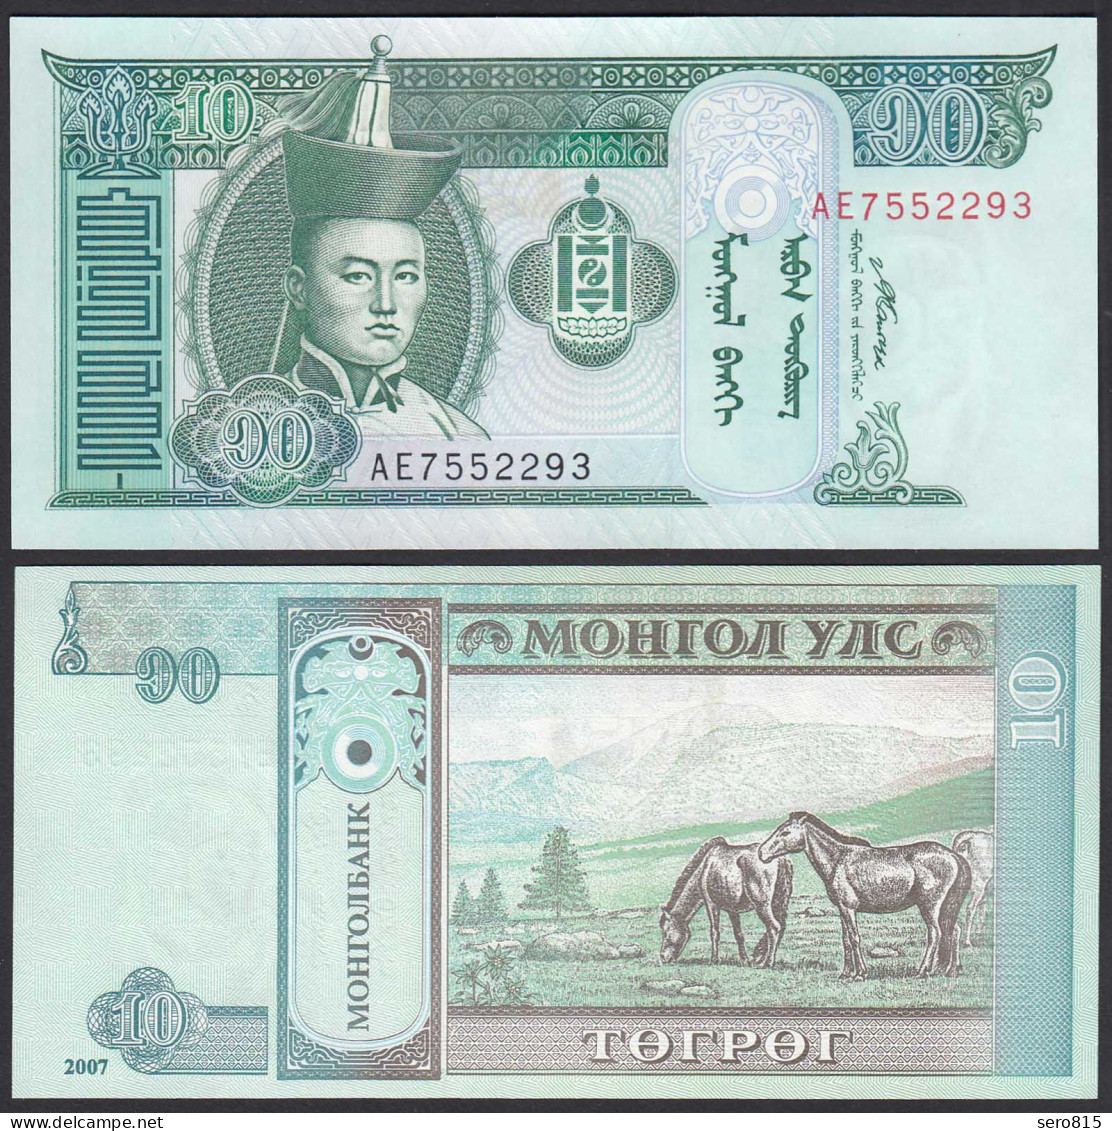 Mongolei - Mongolia 10 Tugrik Banknote 1993 Pick 54 UNC (1)   (30163 - Autres - Asie